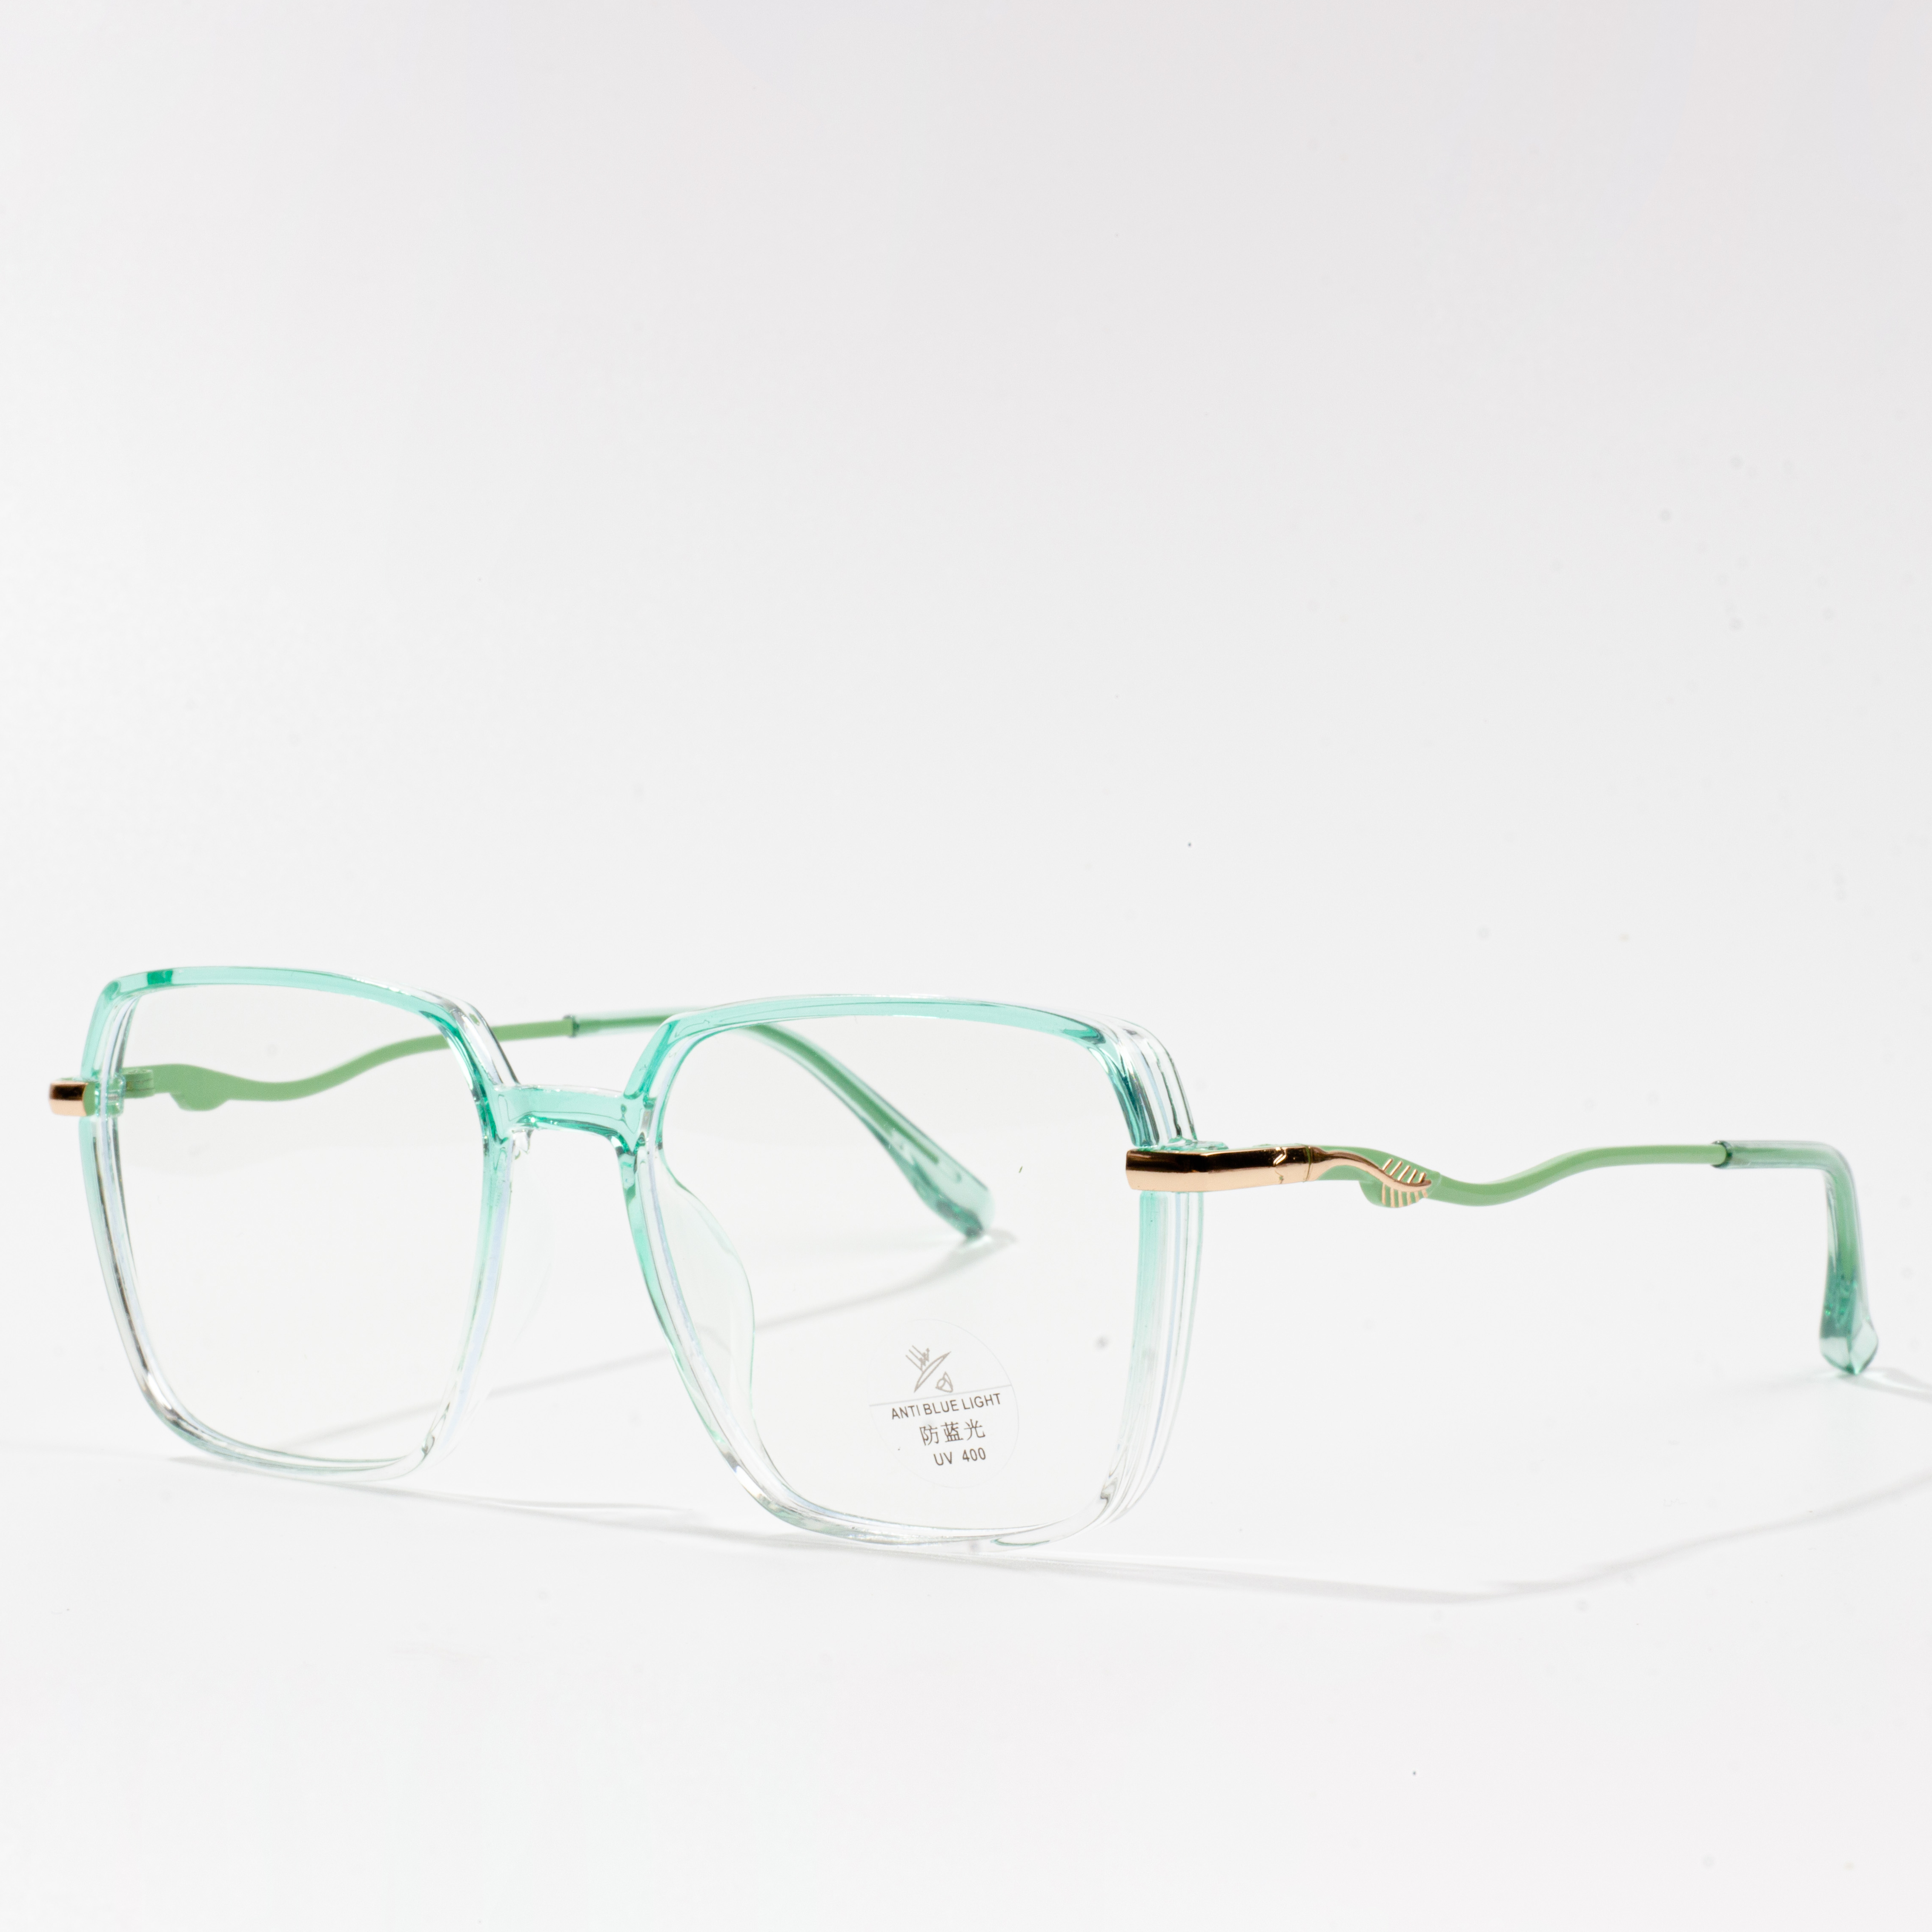 funky eyeglass frames